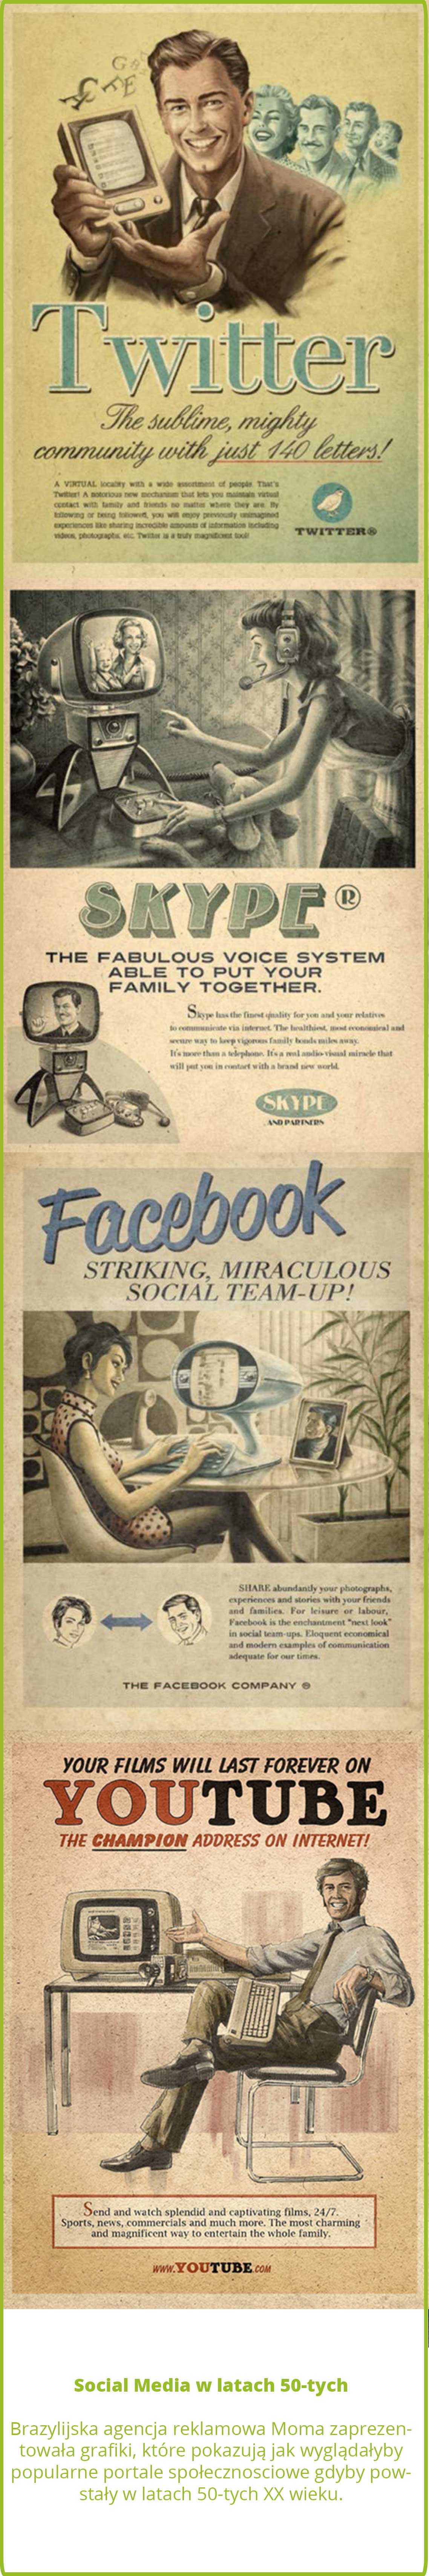 Social Media w latach 50-tych